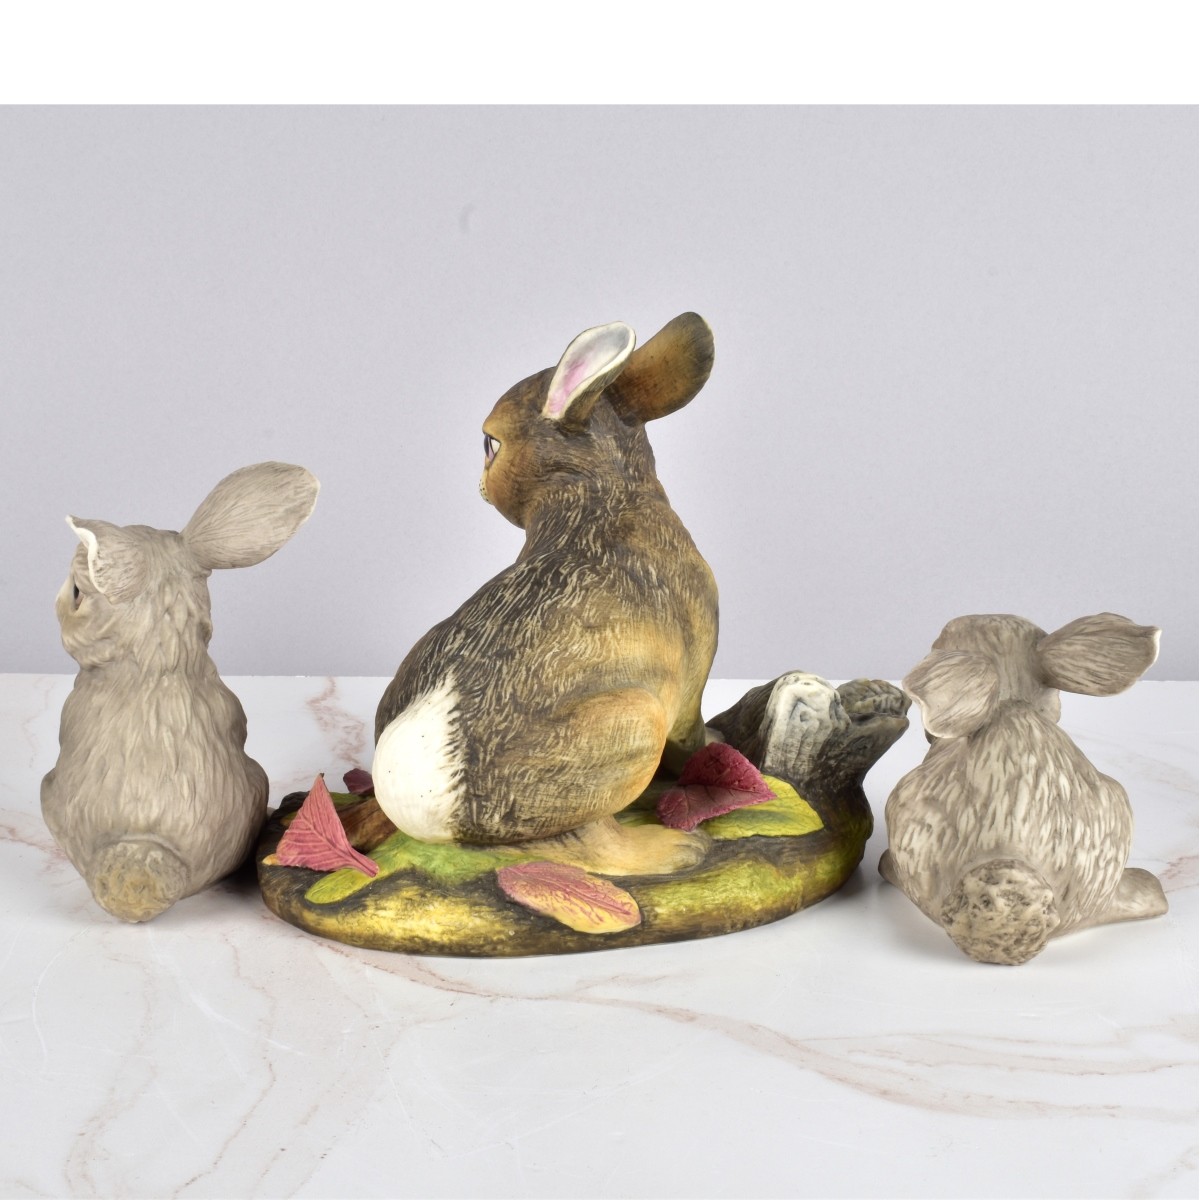 Boehm Rabbit Figurines